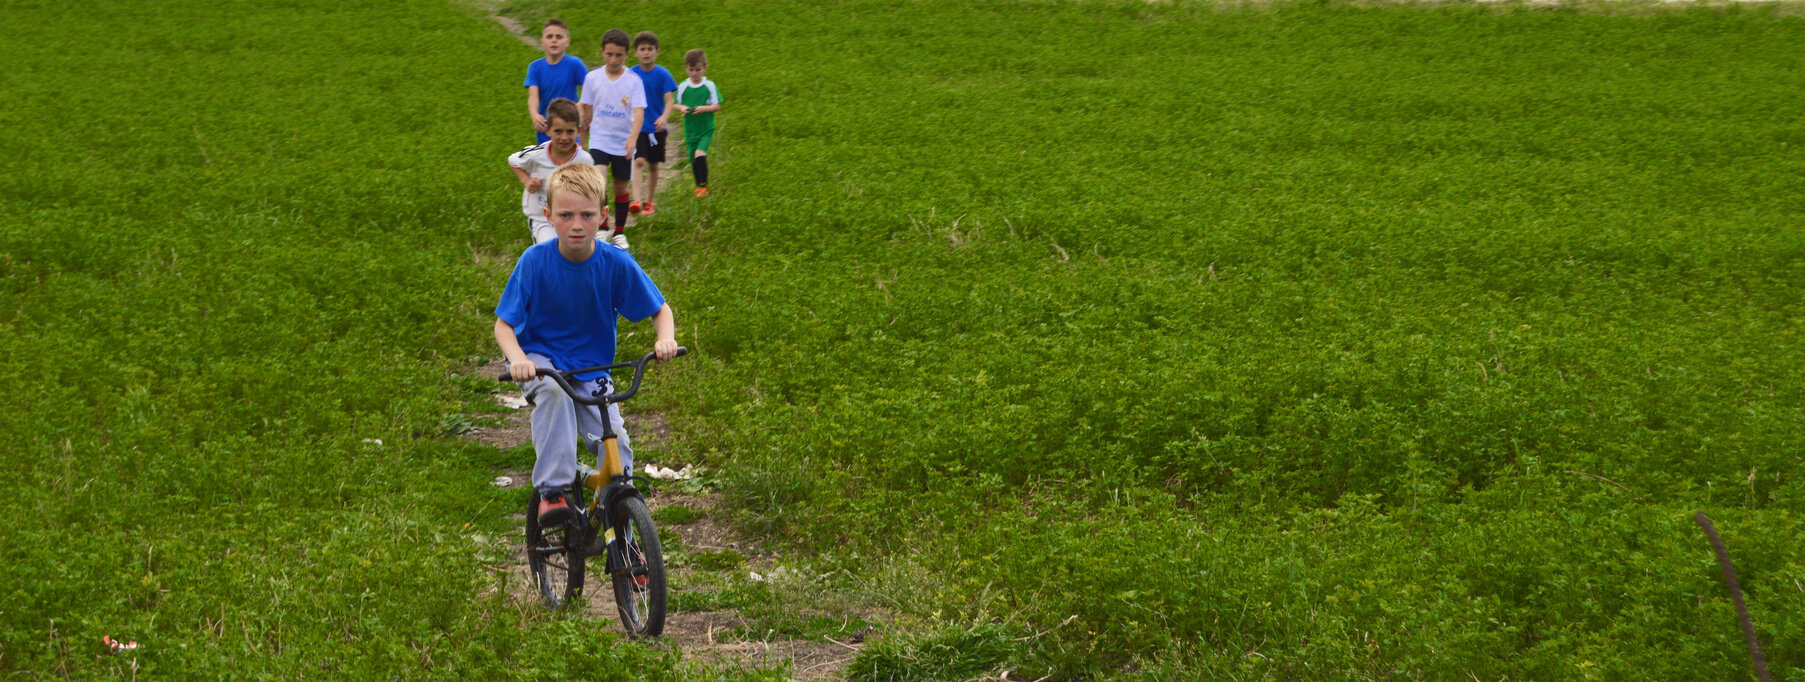 Children in Skenderaj ride bikes in an open field during the summer break.